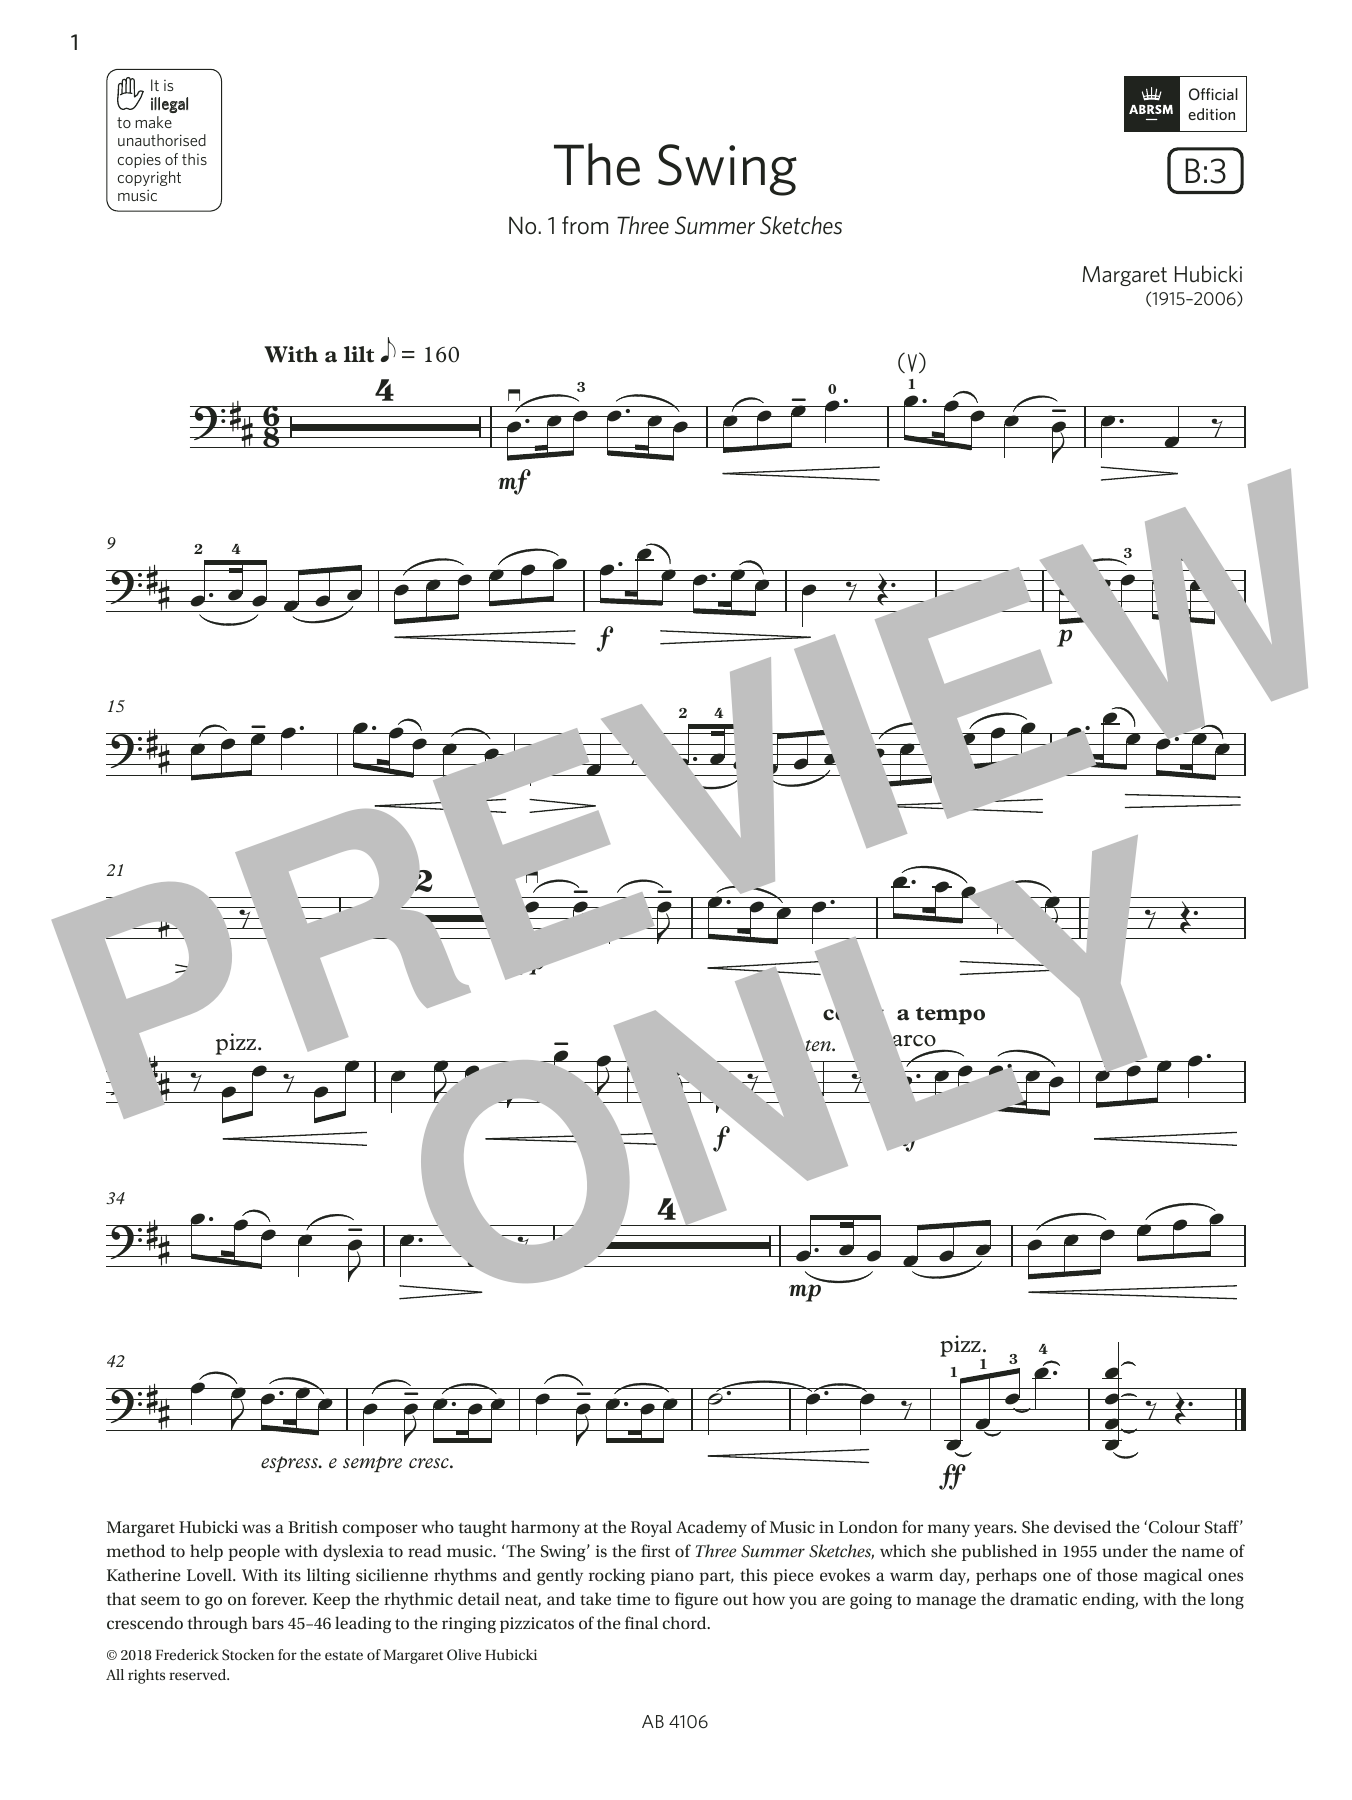 Download Margaret Hubicki The Swing (Grade 3, B3, from the ABRSM Sheet Music